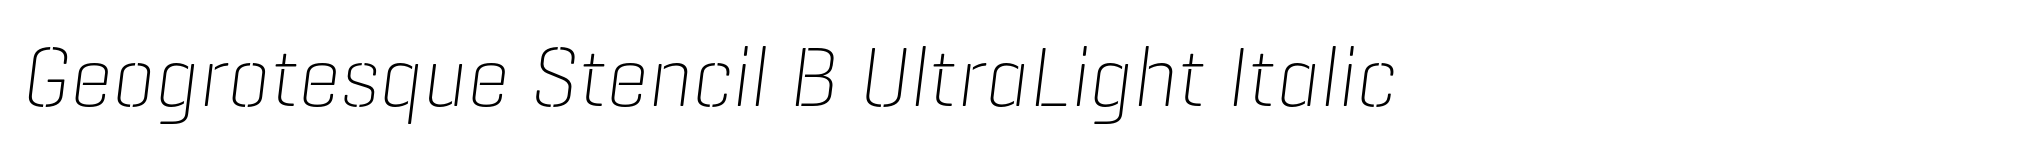 Geogrotesque Stencil B UltraLight Italic image